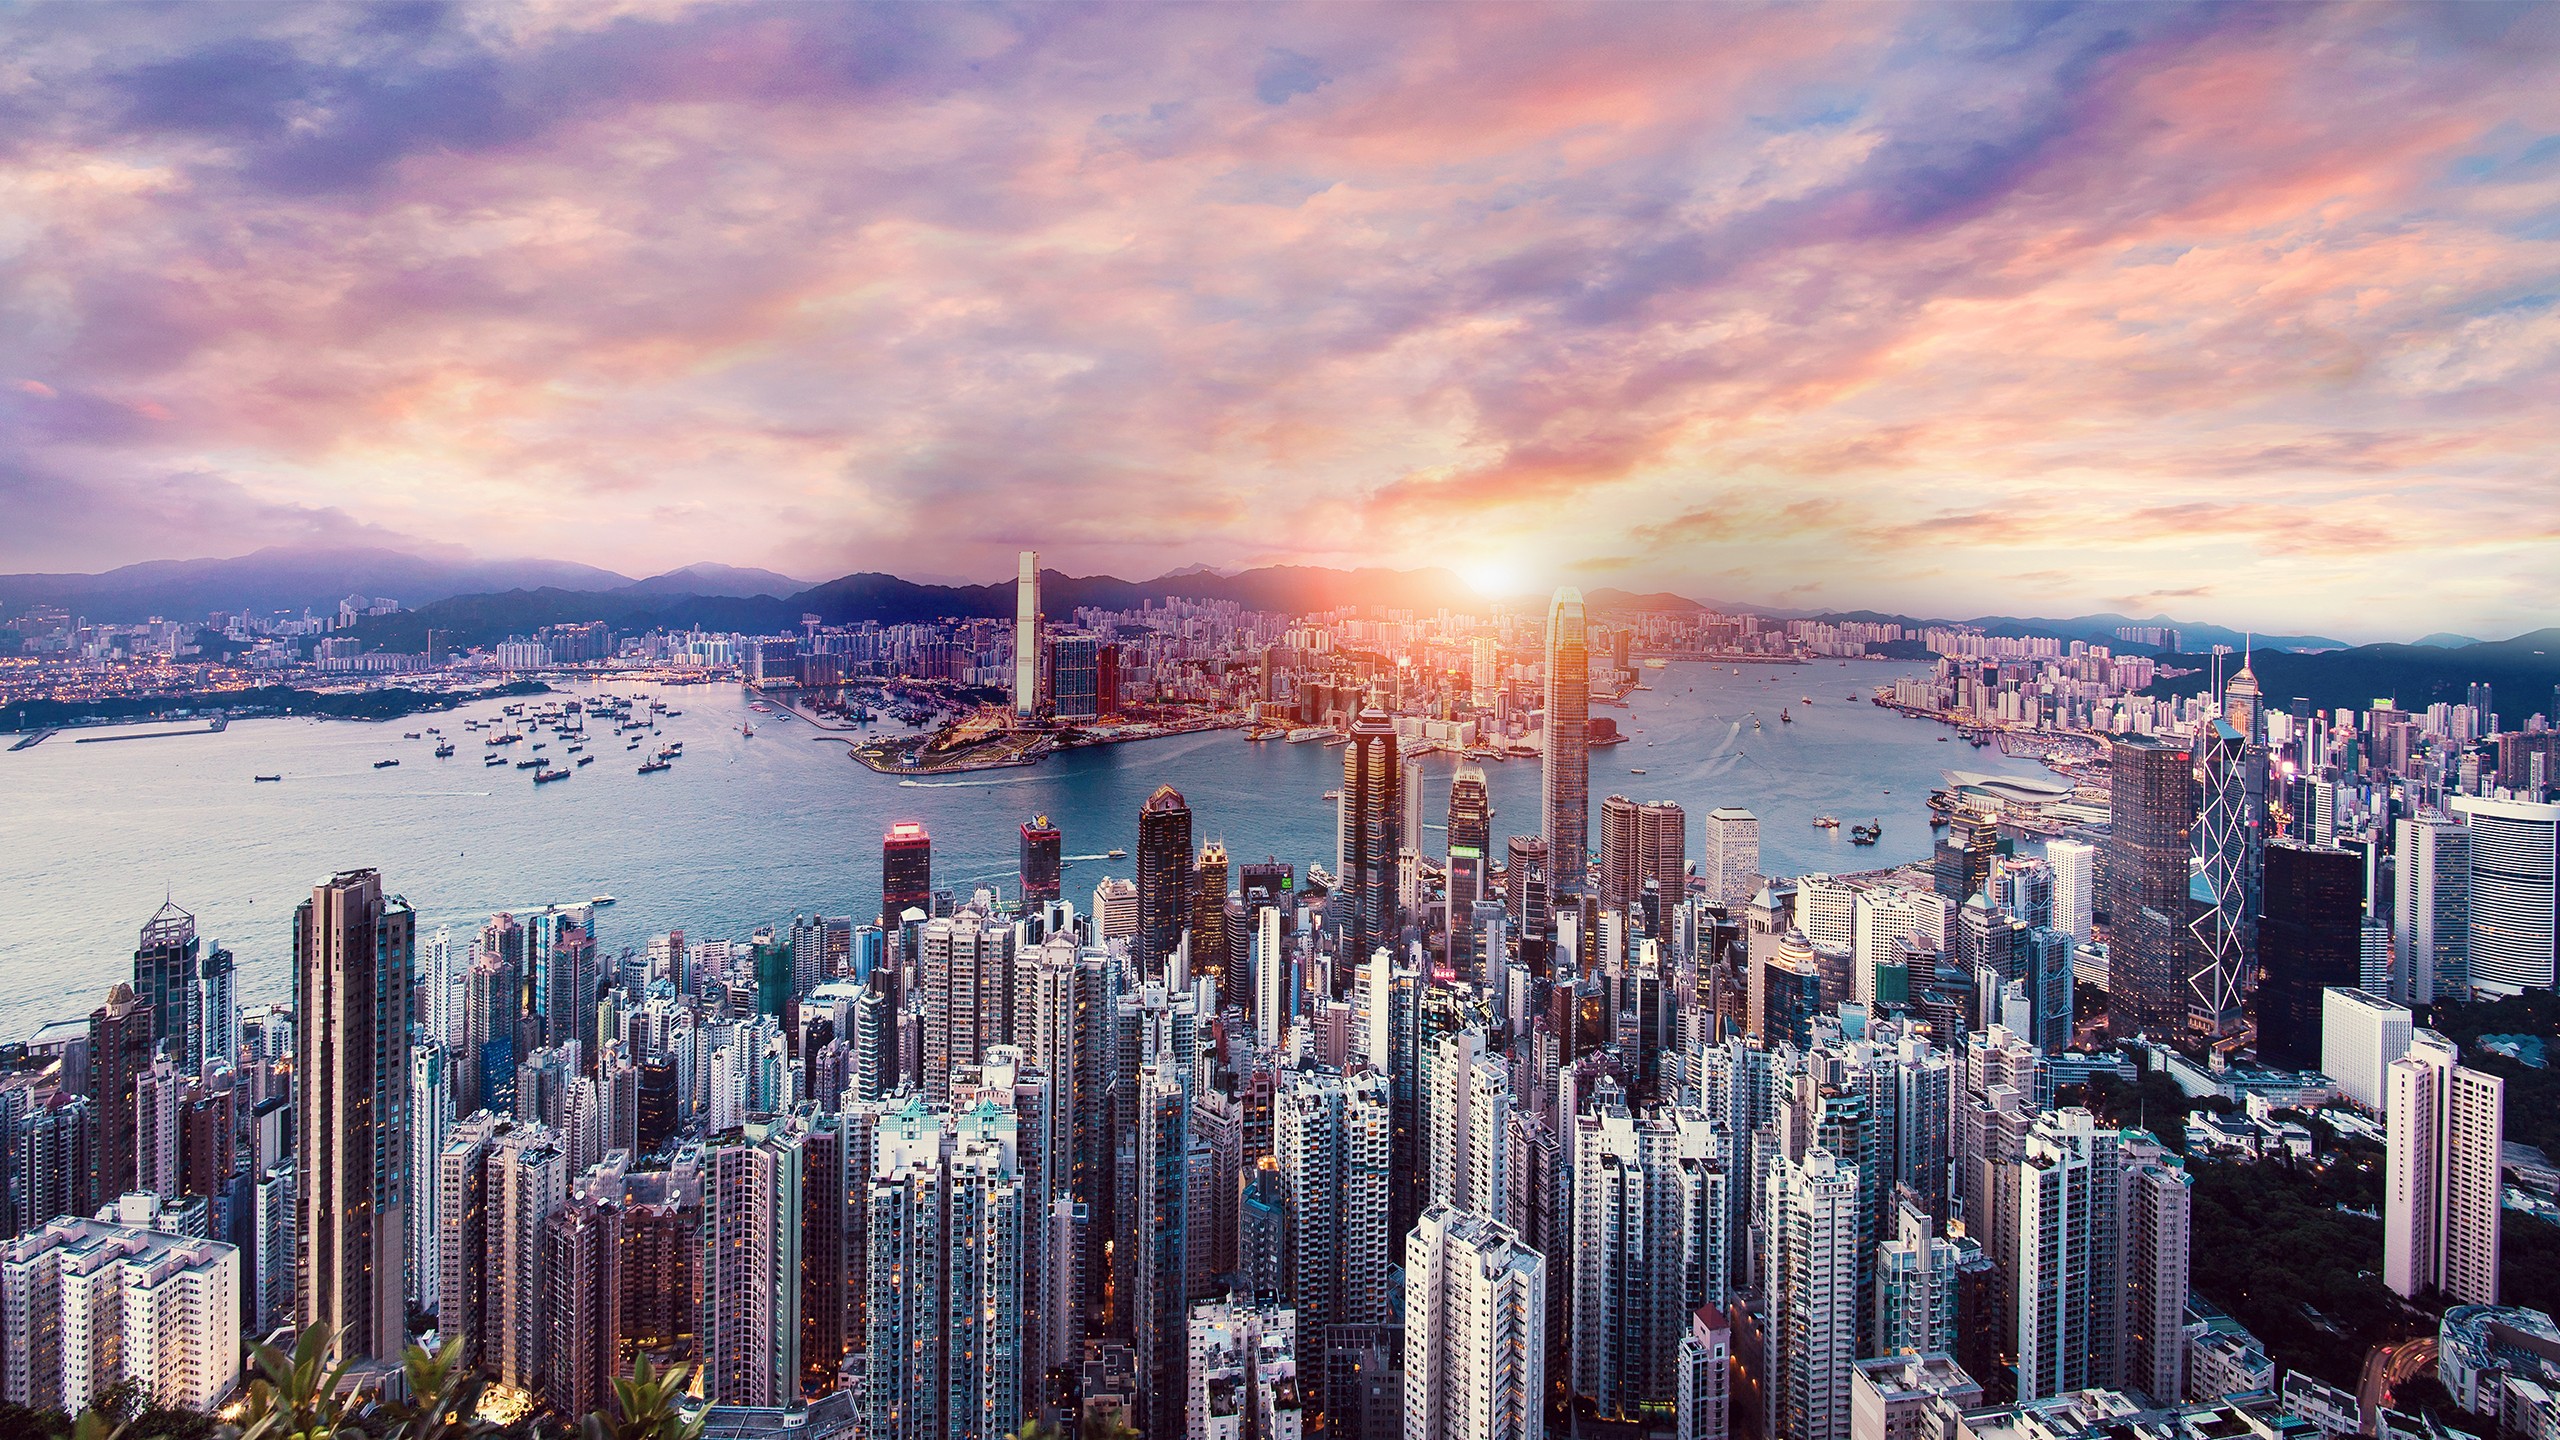 hk tourism board website